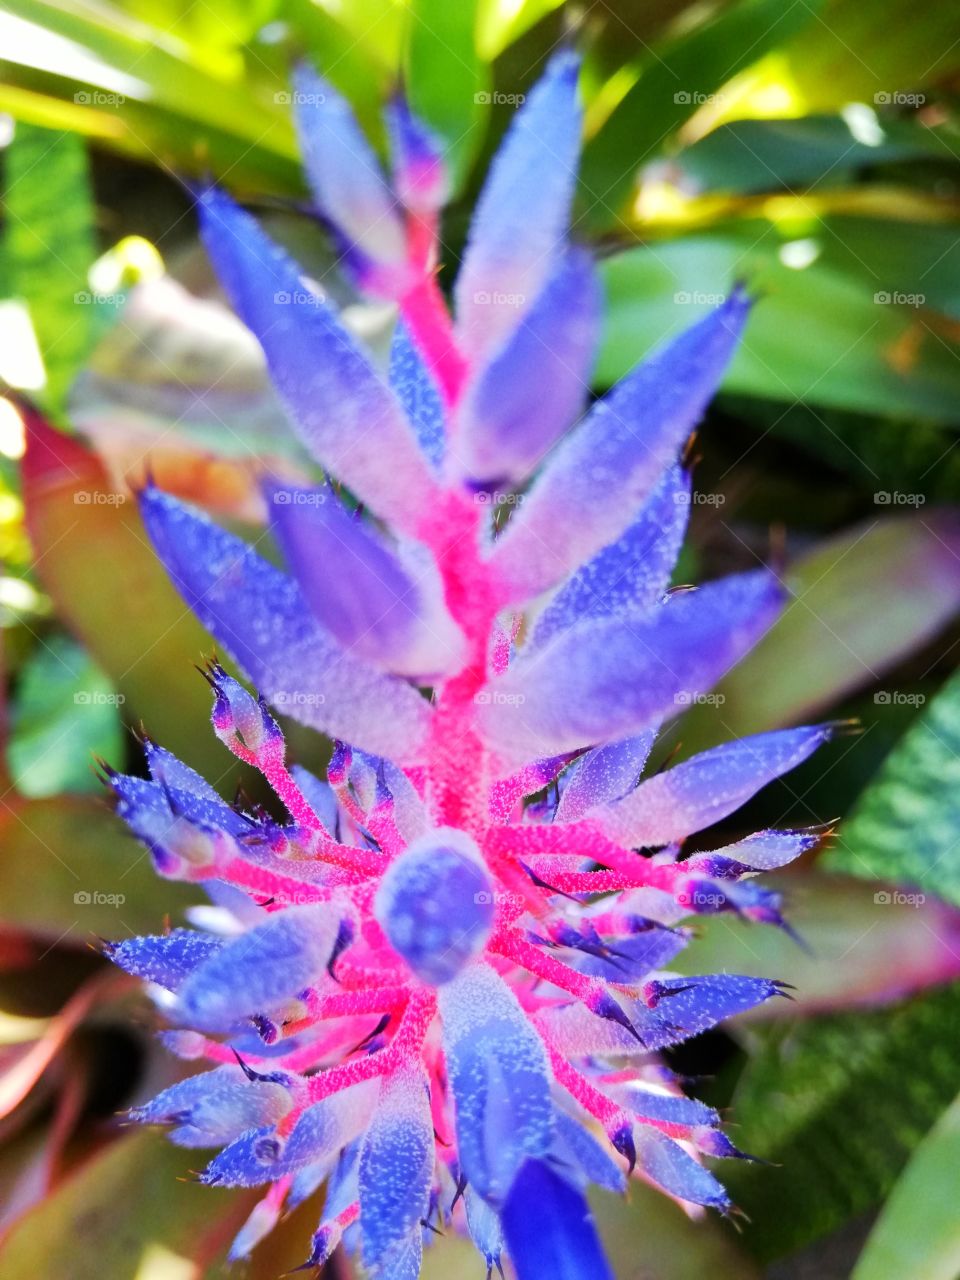 This vibrant plant looks like a sea creature, enjoy.